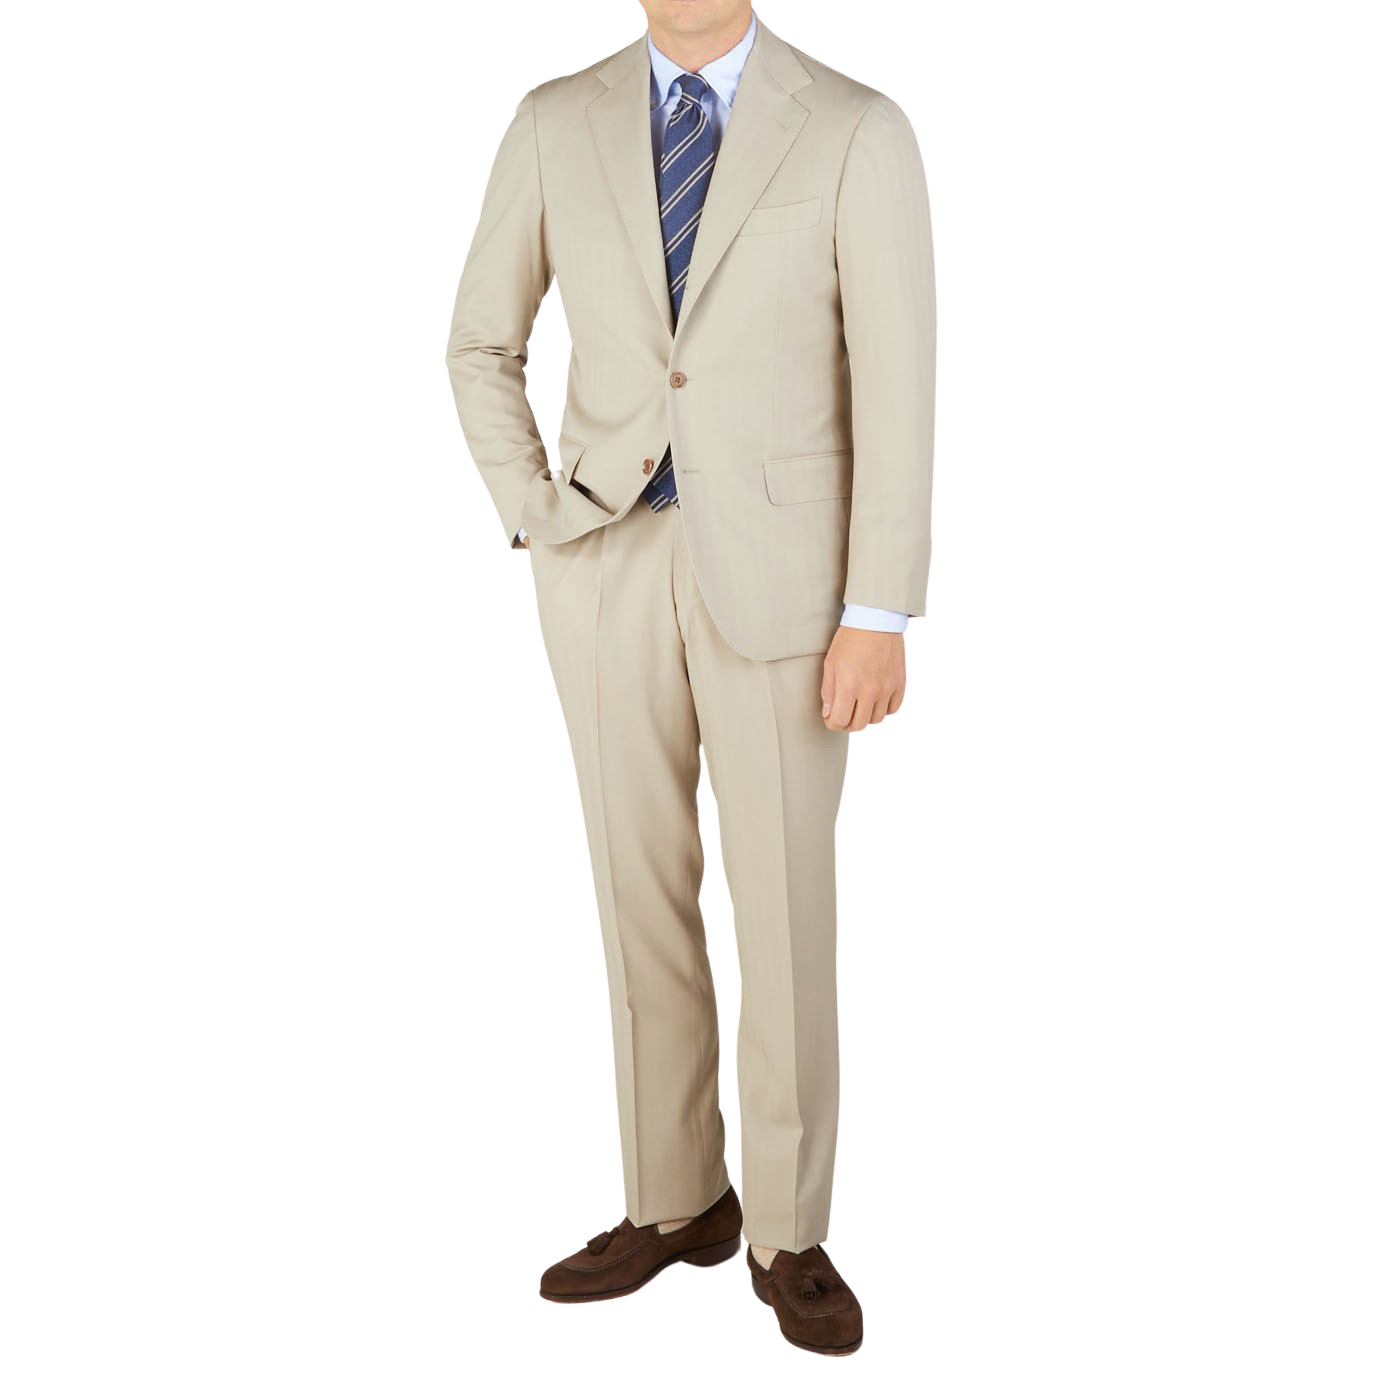 A man is posing in a Light Beige Herringbone Wool Suit by Ring Jacket.